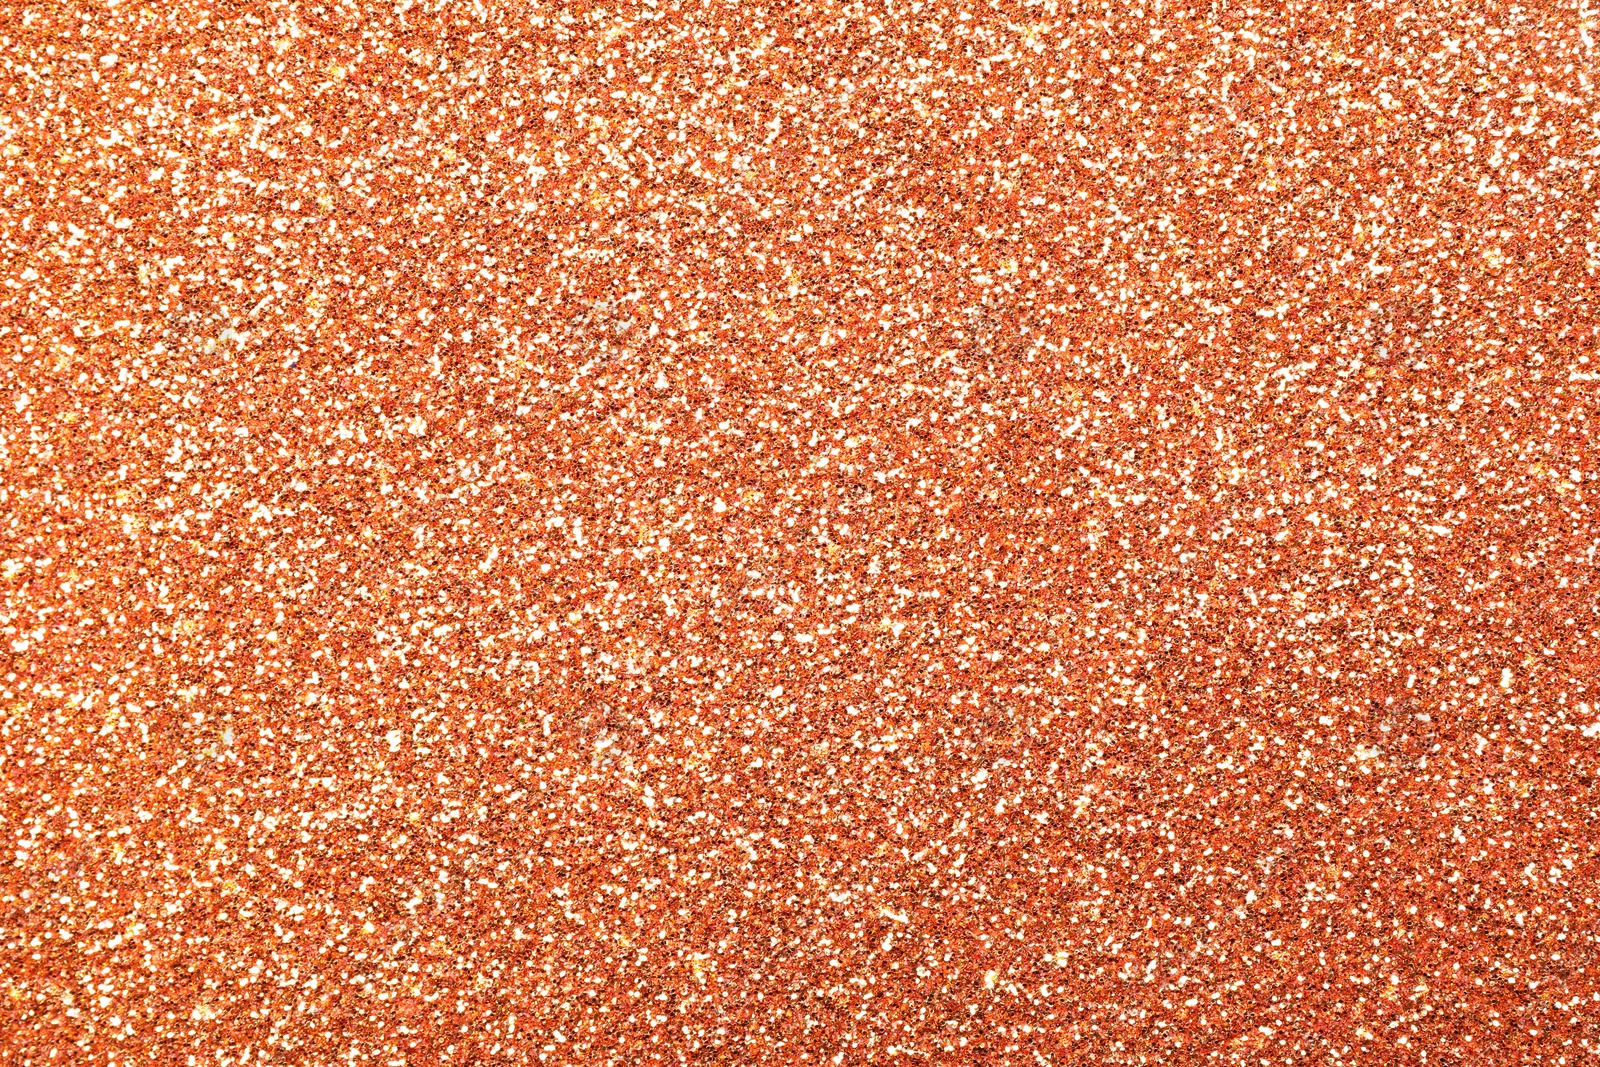 Image of Beautiful shiny peach glitter as background, closeup